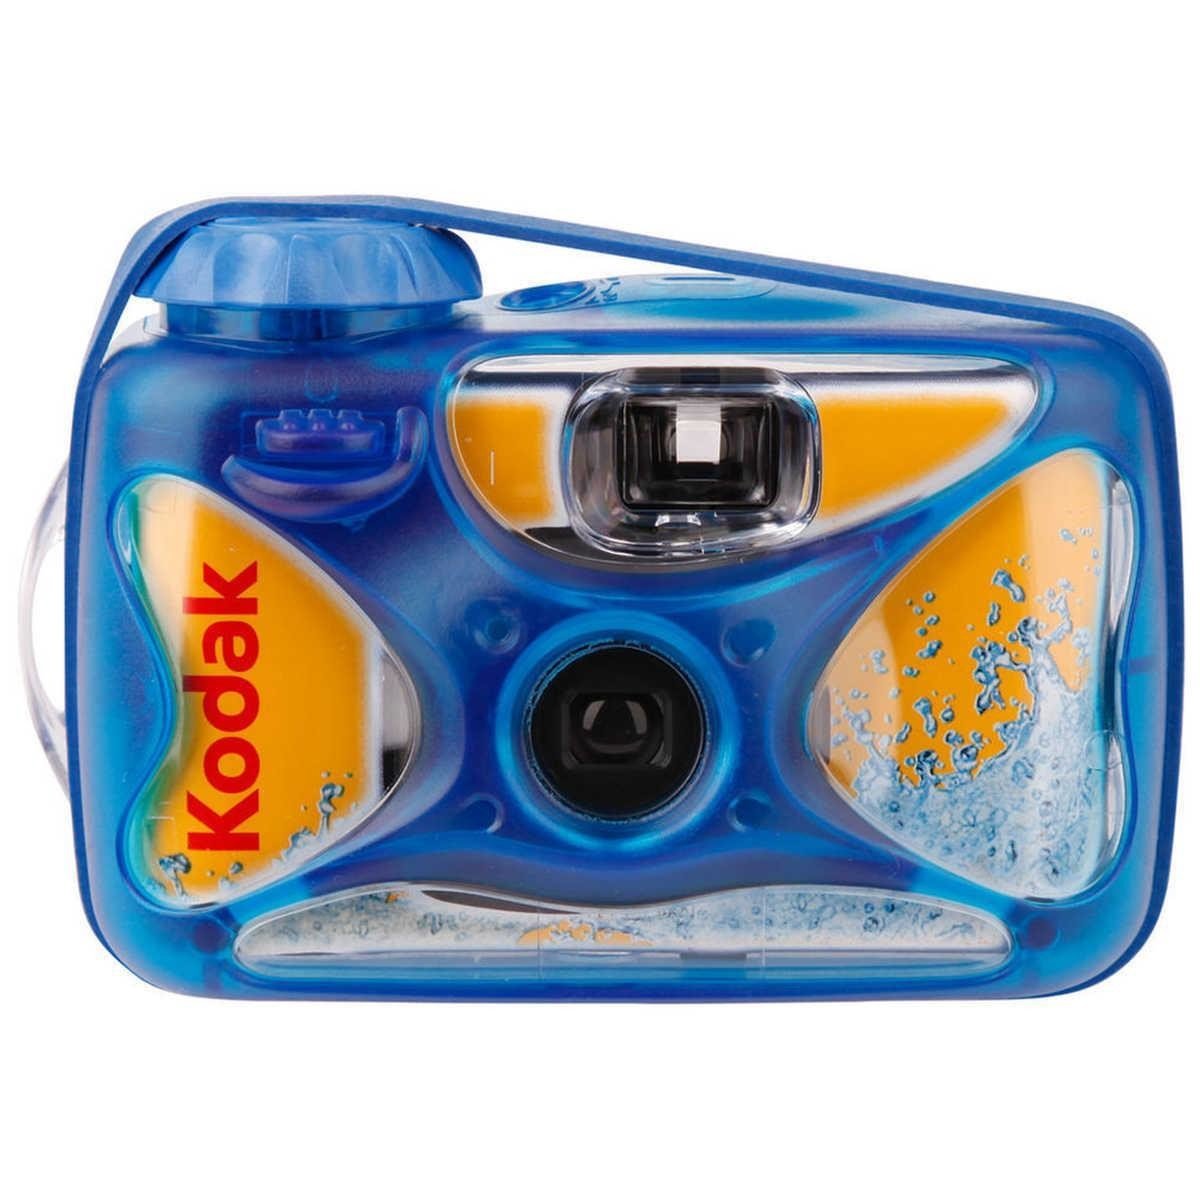 Kodak Water & Sport Waterproof 15m Camera